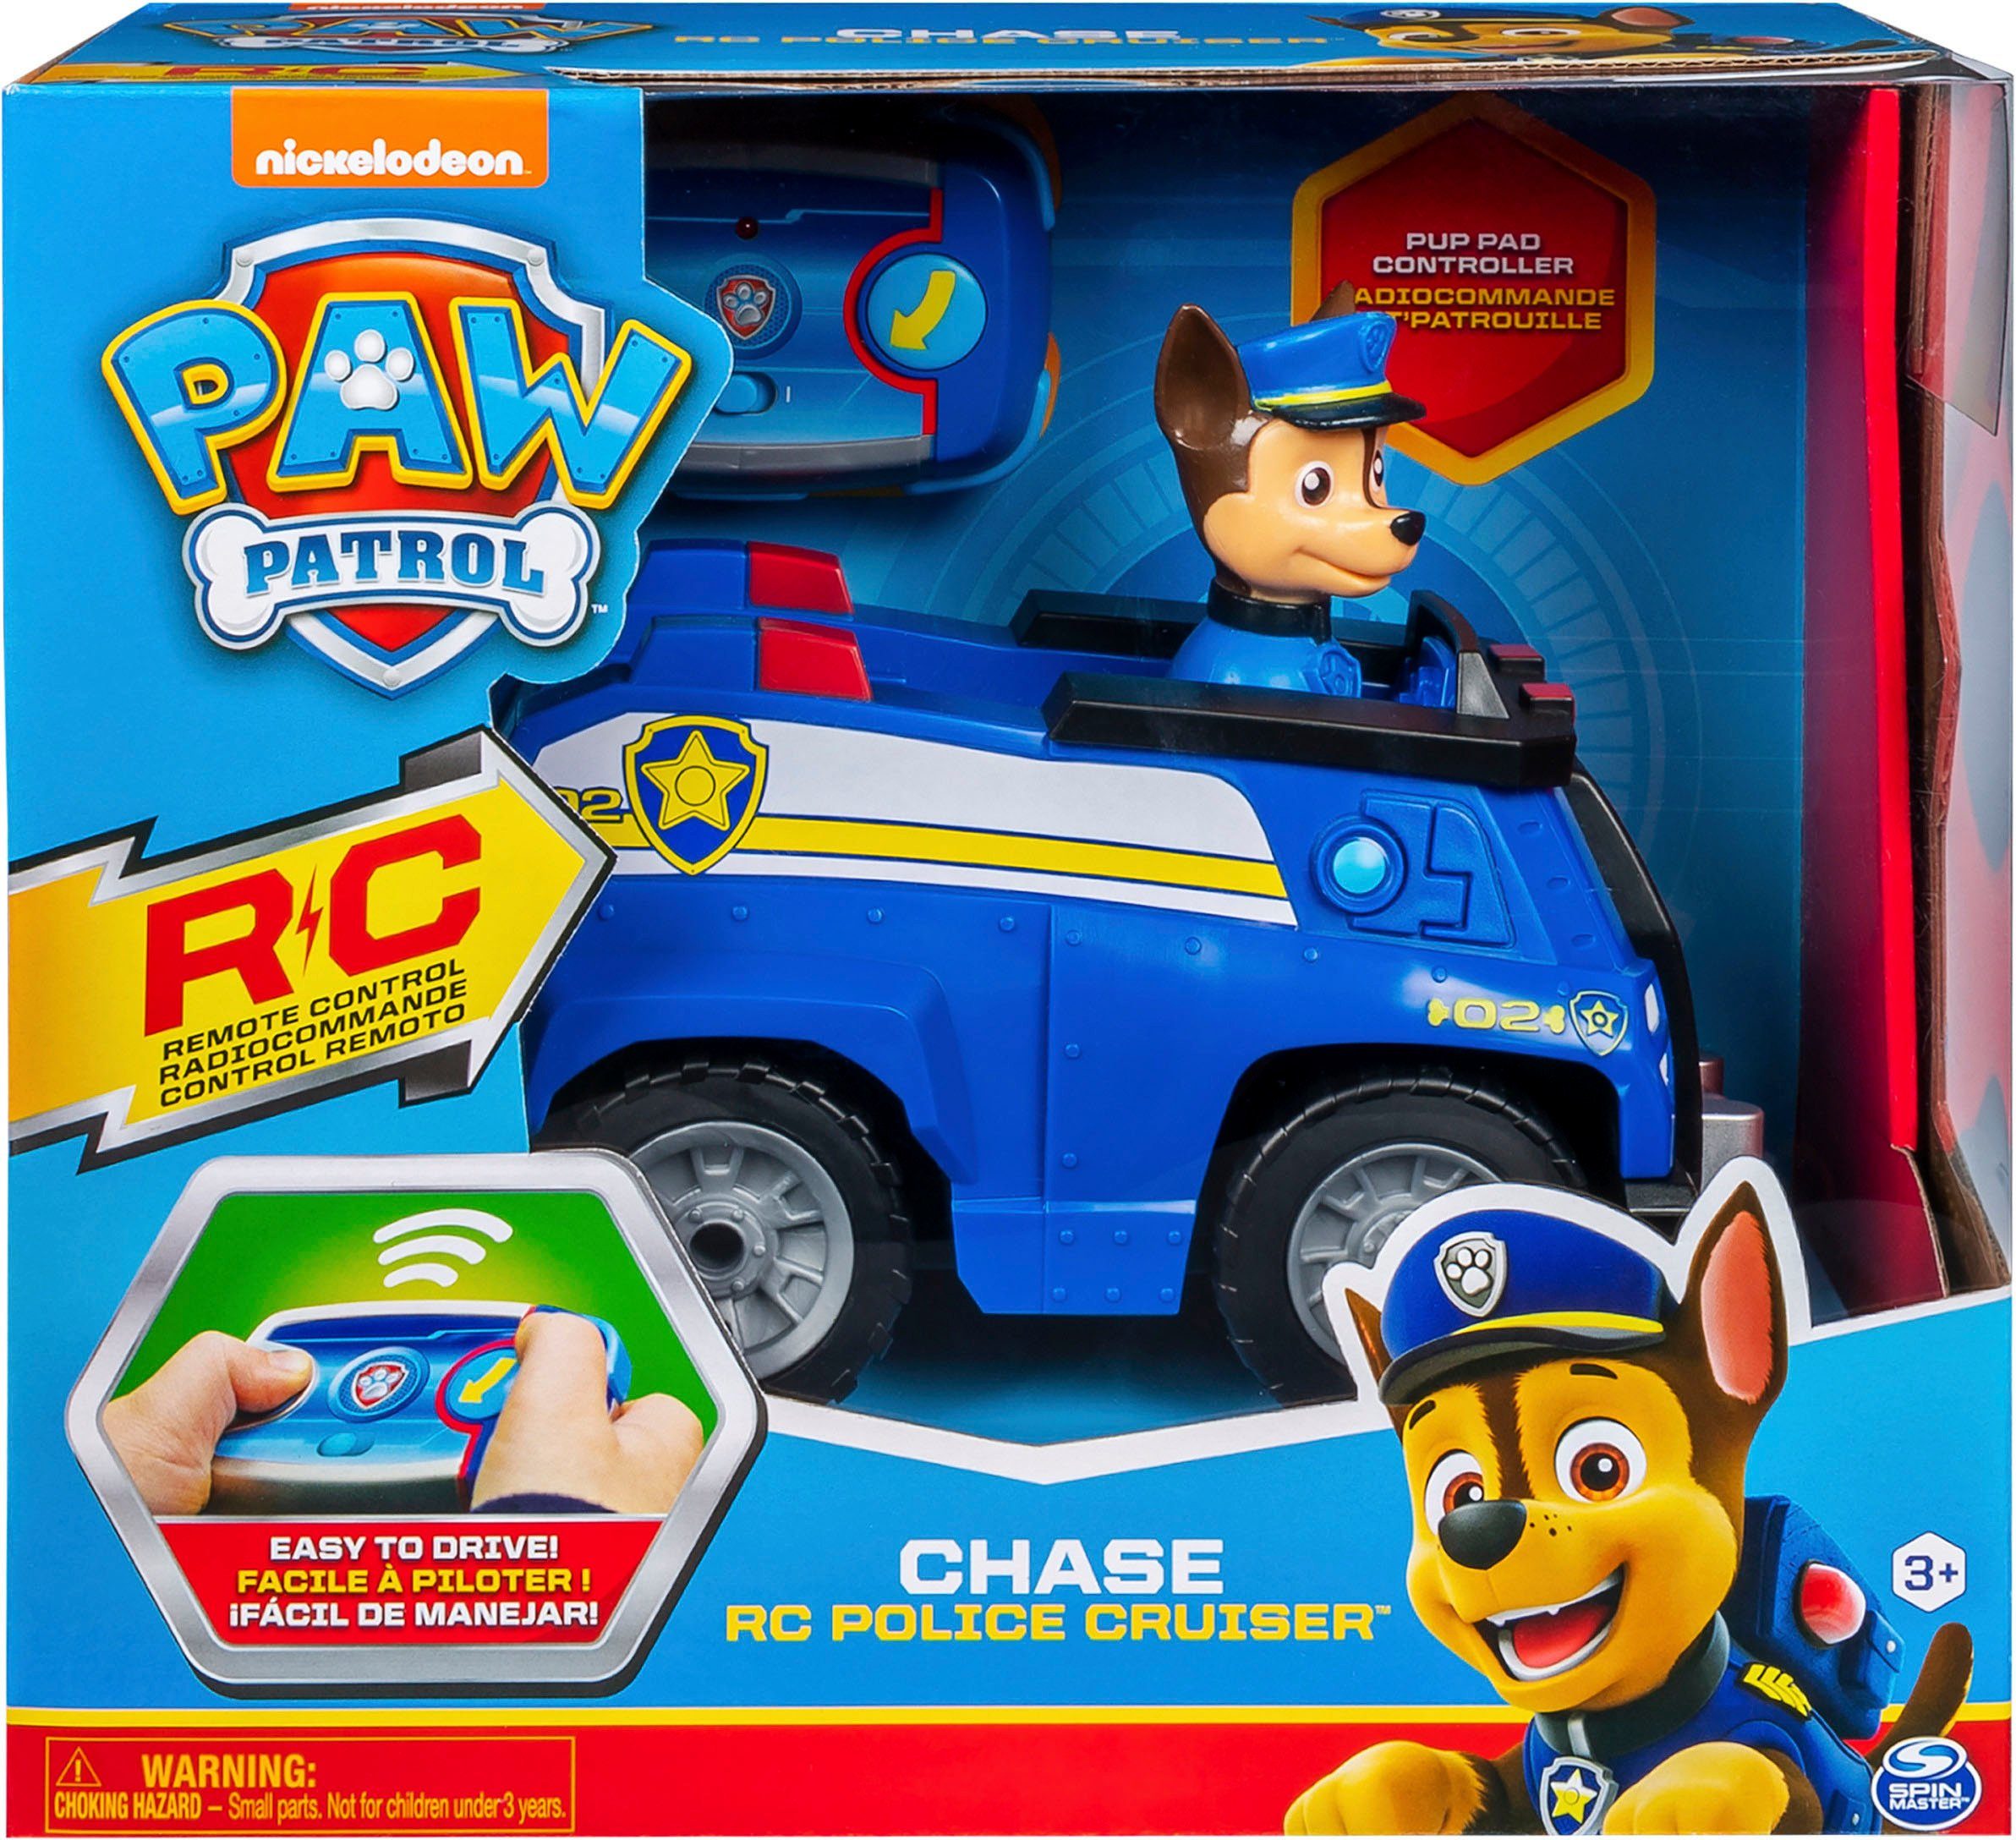 Patrol, PAW Fernbedienung inklusive Master 2,4GHz, mit Polizeiauto Chases Spin RC-Auto